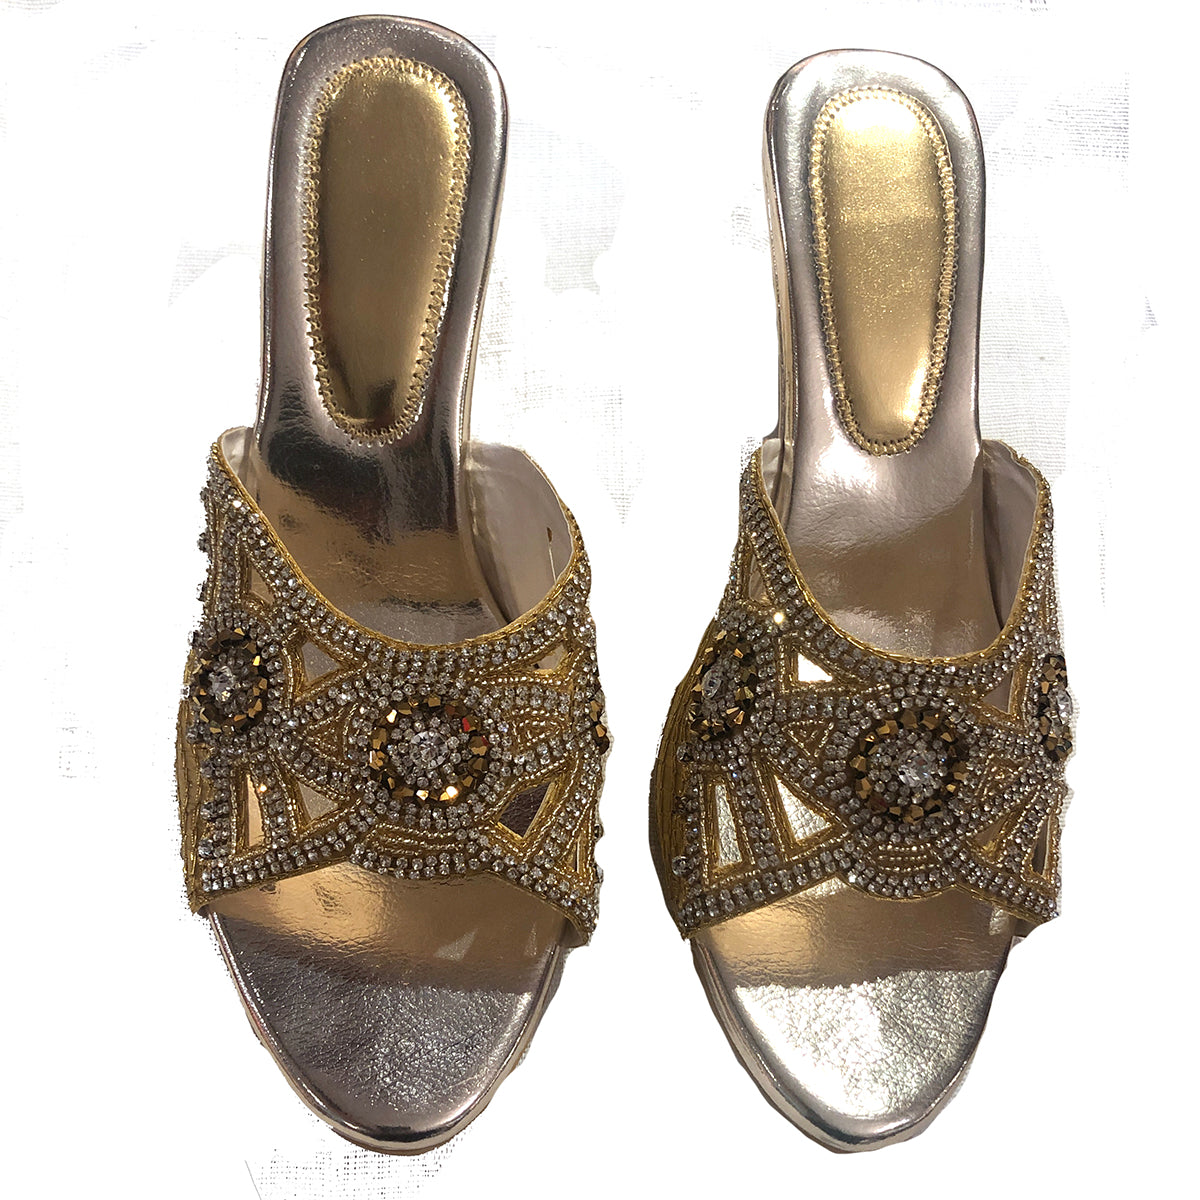 DT Gold Sandals 2 - Vintage India NYC